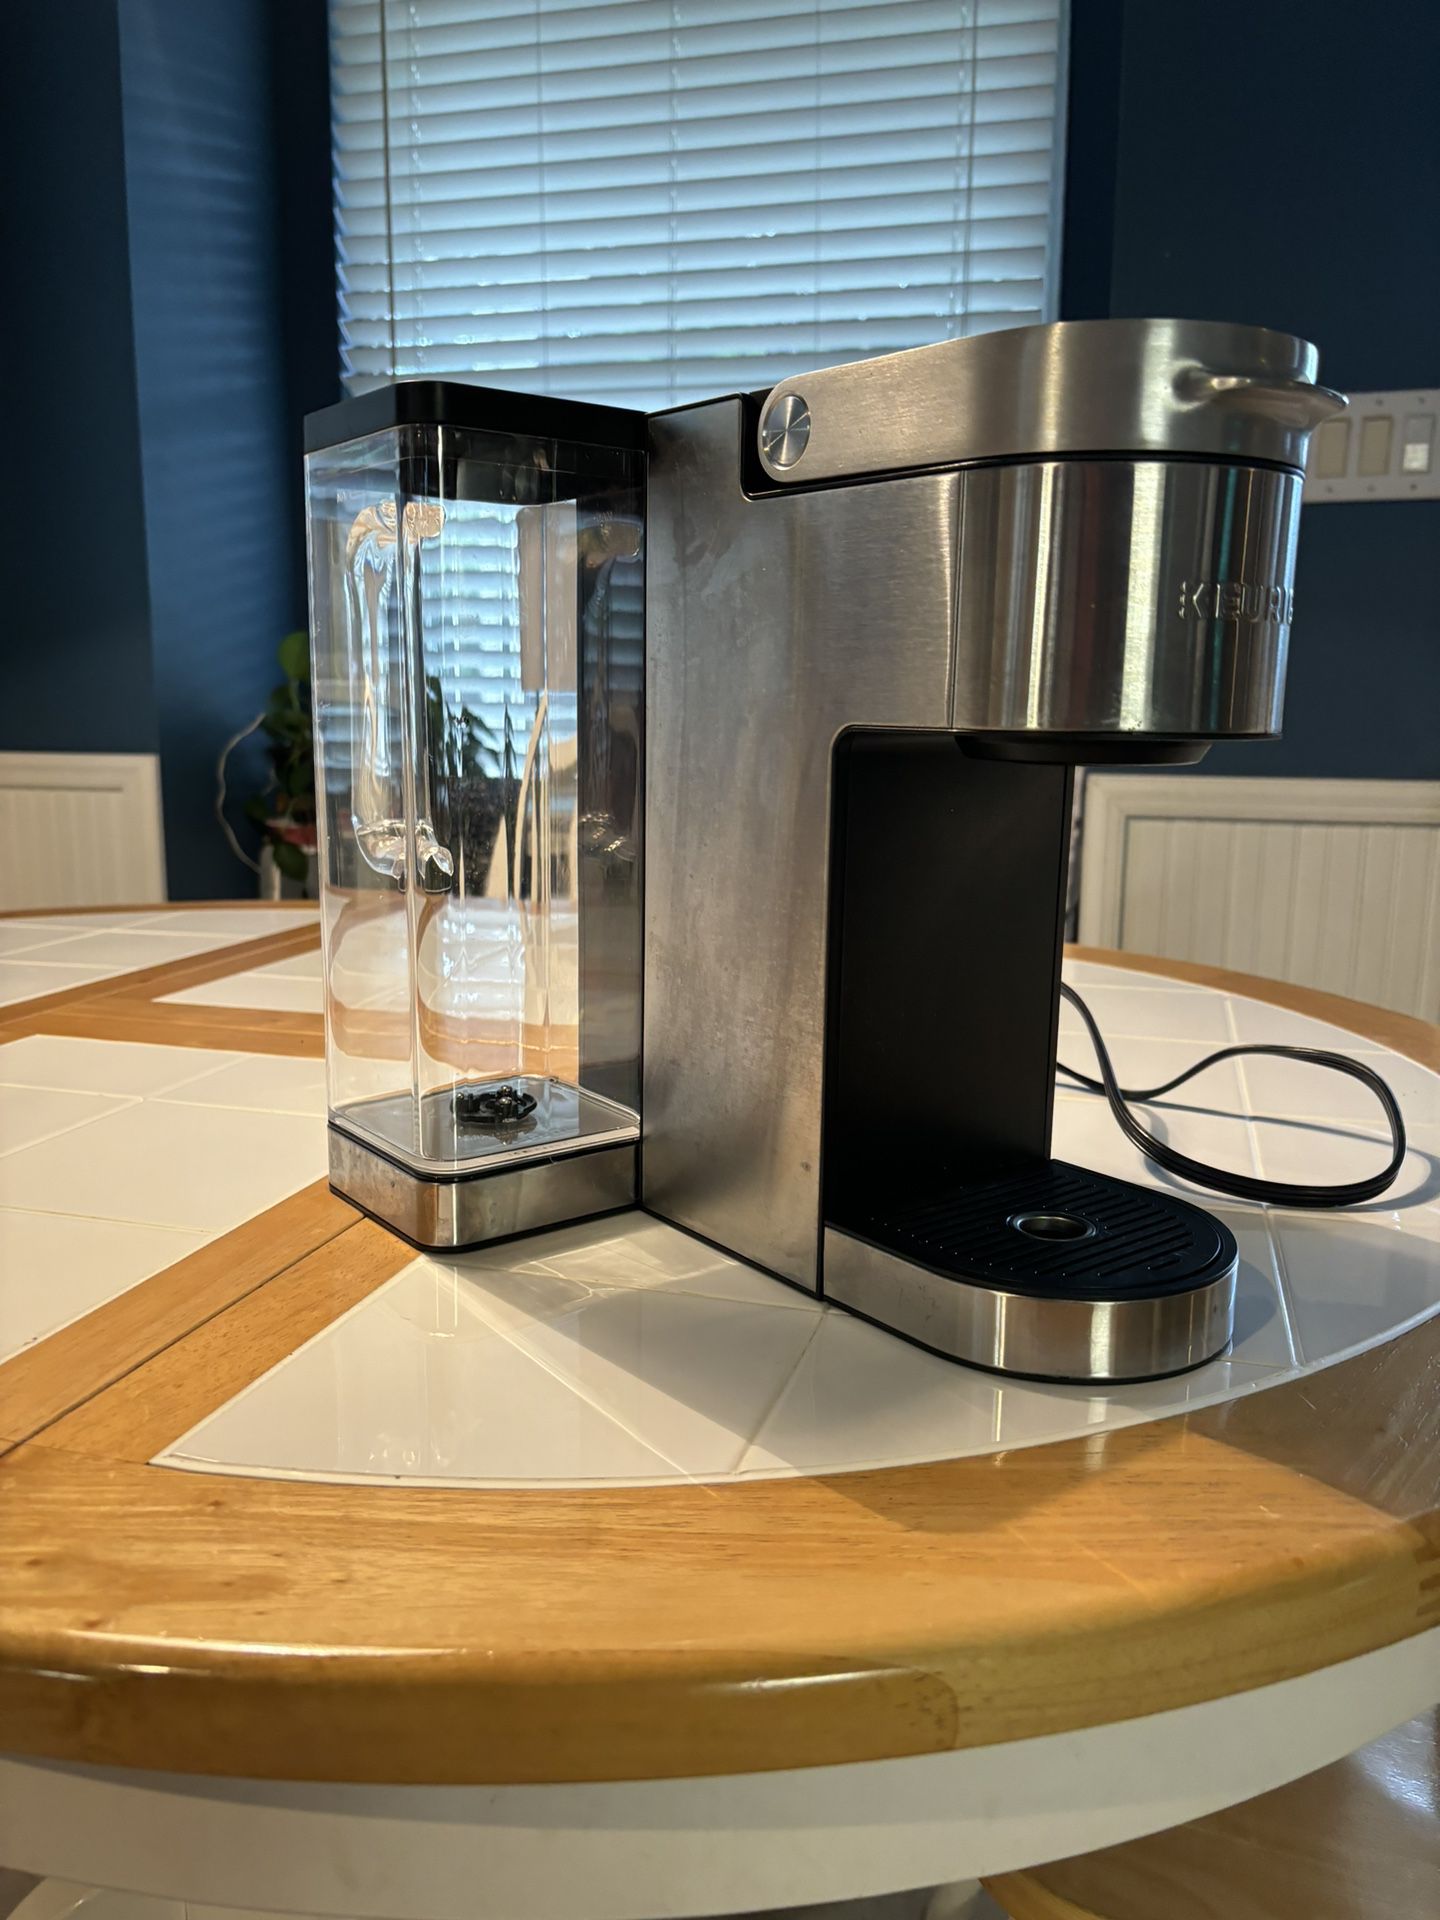 Keurig K-Supreme Single Serve K-Cup Coffee Maker